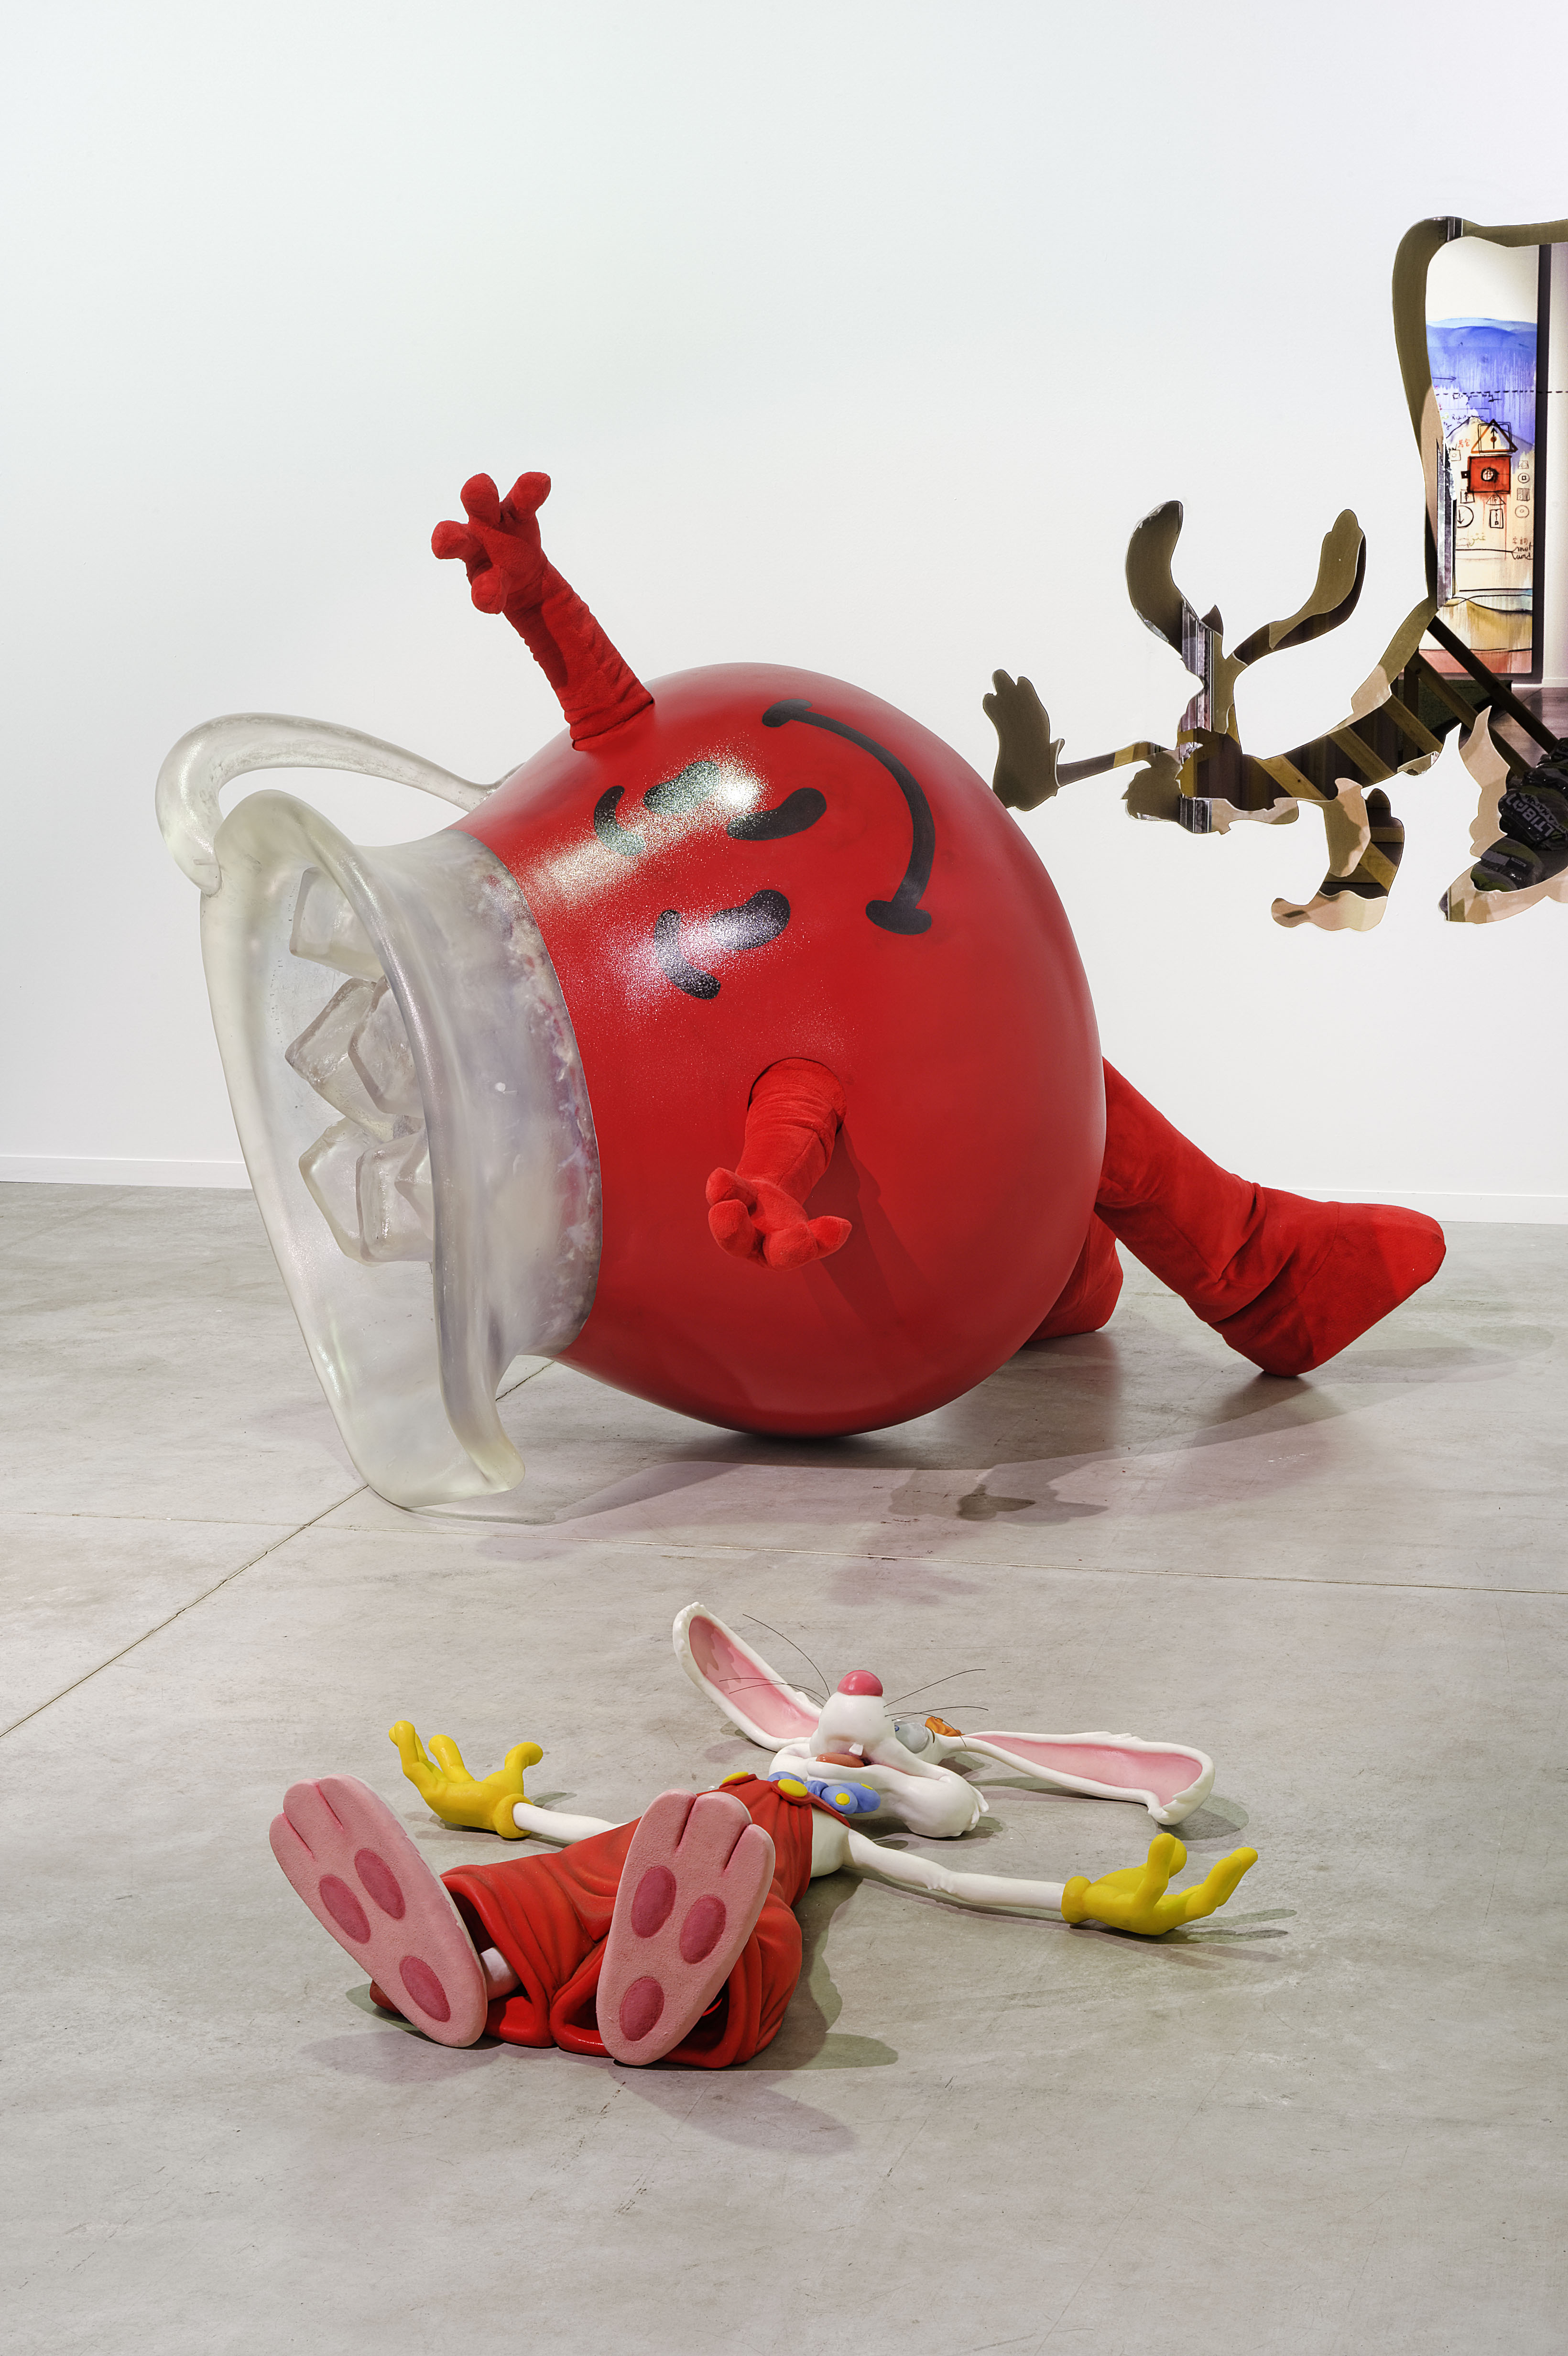 Dan colen – Sculptures hyper-realiste – Biennale de Lyon / Livin and Dyin